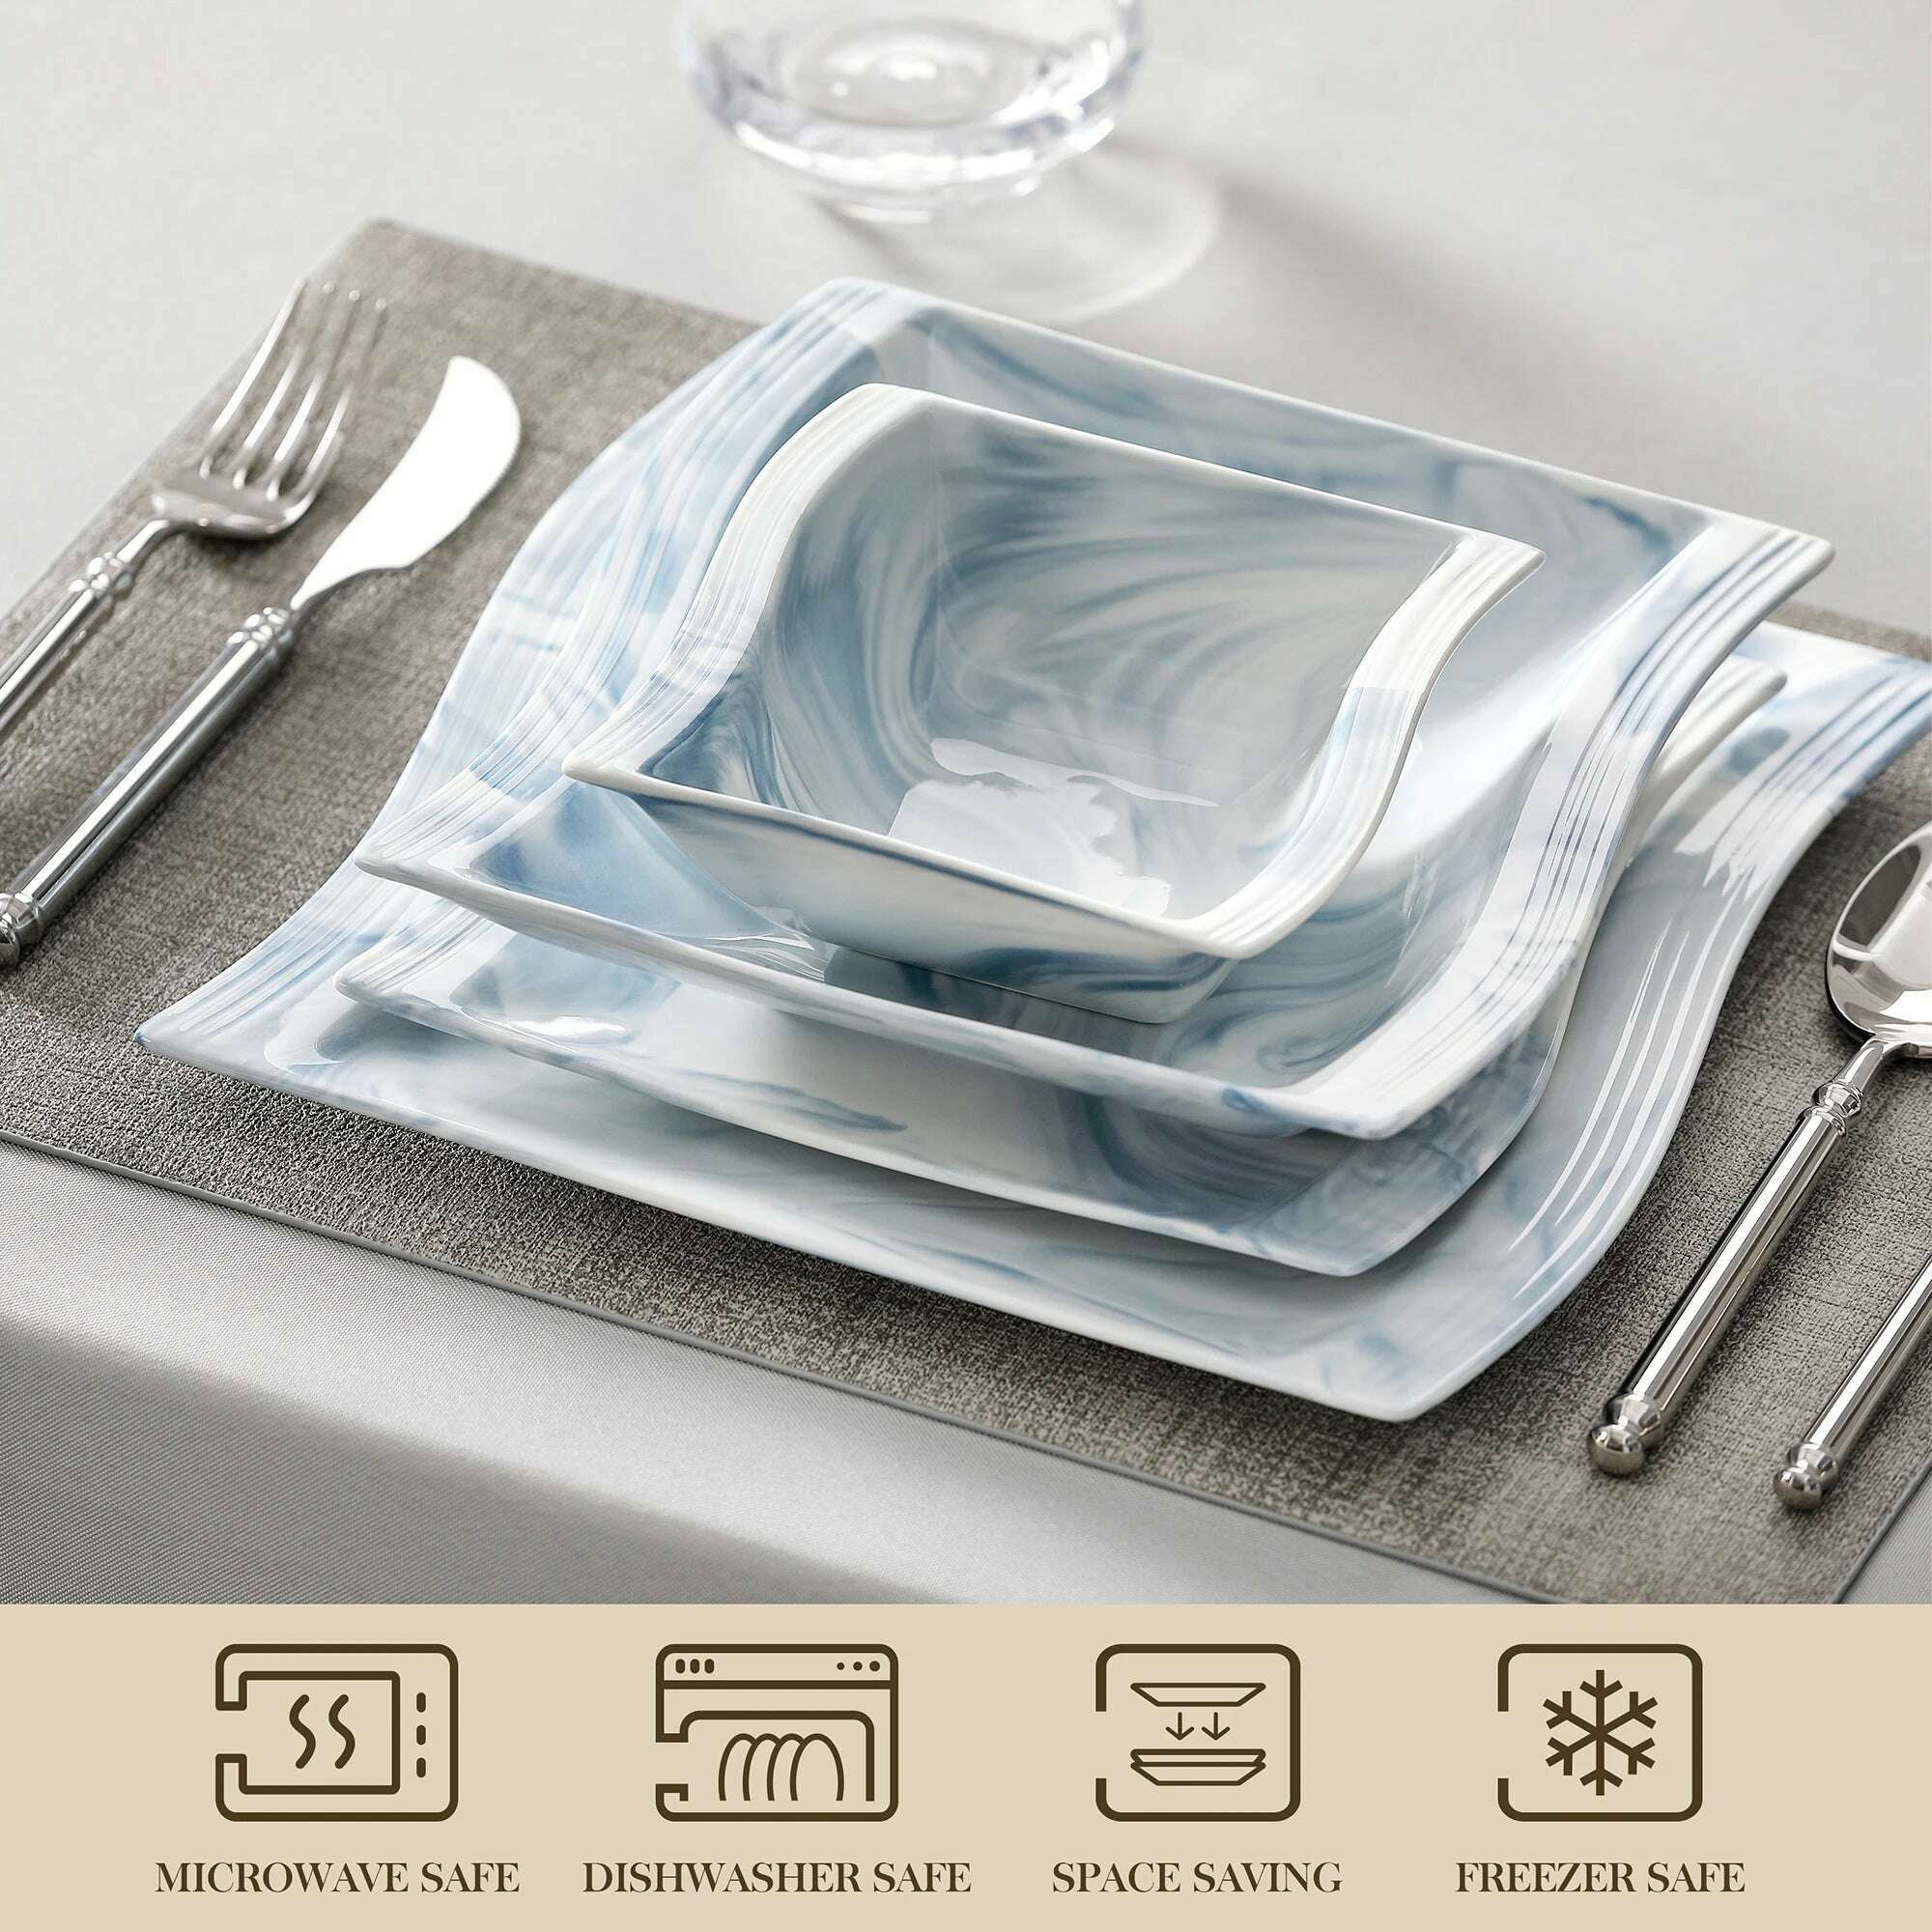 KIMLUD, MALACASA FLORA 26-PIECE Nordic European Marble Blue Porcelain Tableware Set with Bowl,Dinner Plate,Dessert&Soup Plate Set for 6, KIMLUD Womens Clothes